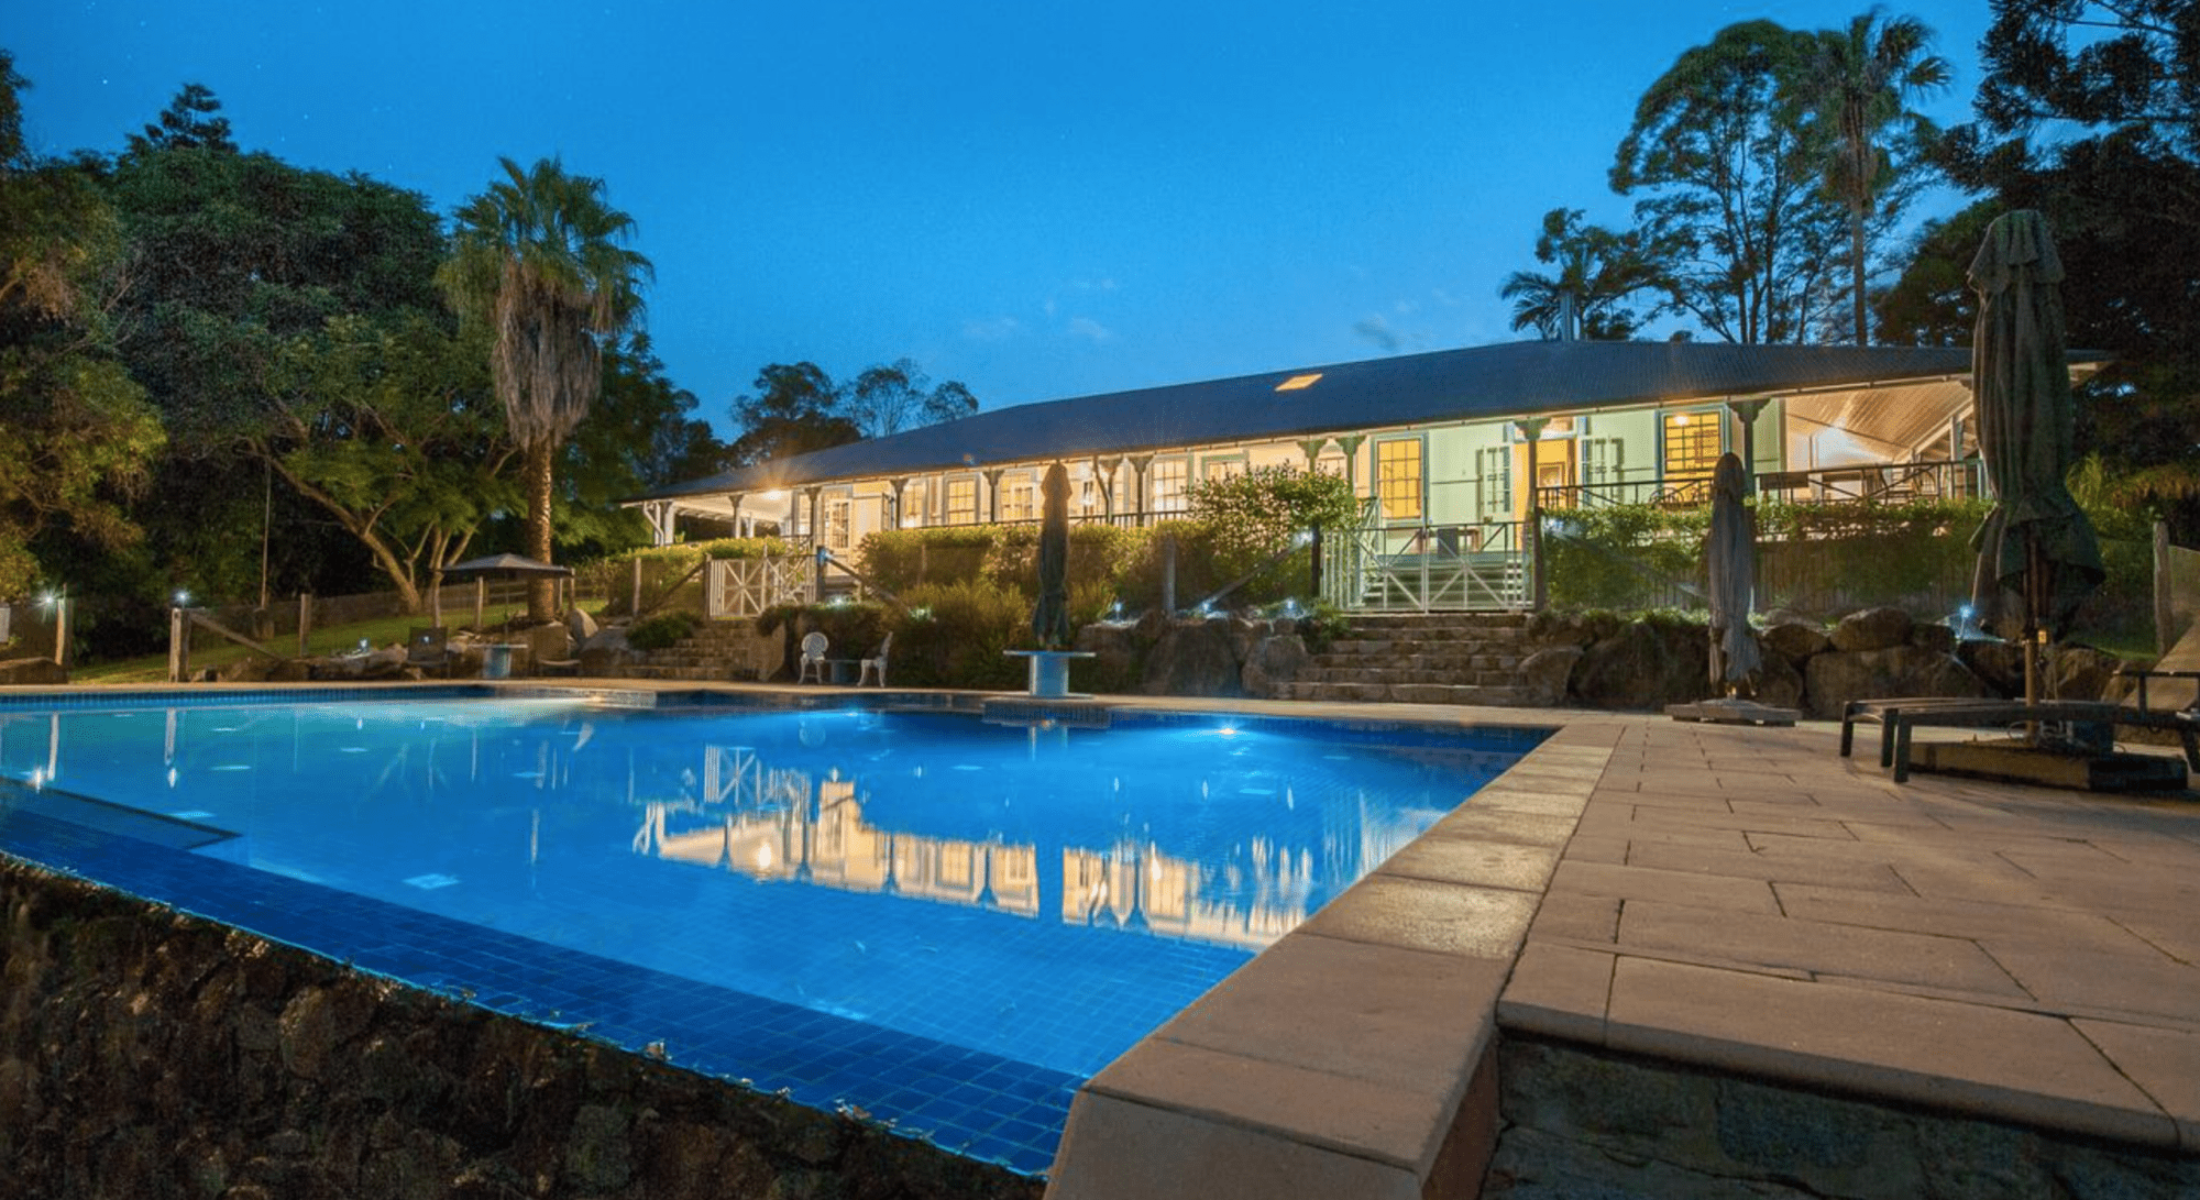 Samford Lakes swimming pool Country Accommodation near Brisbane Moreton Bay Region Queensland